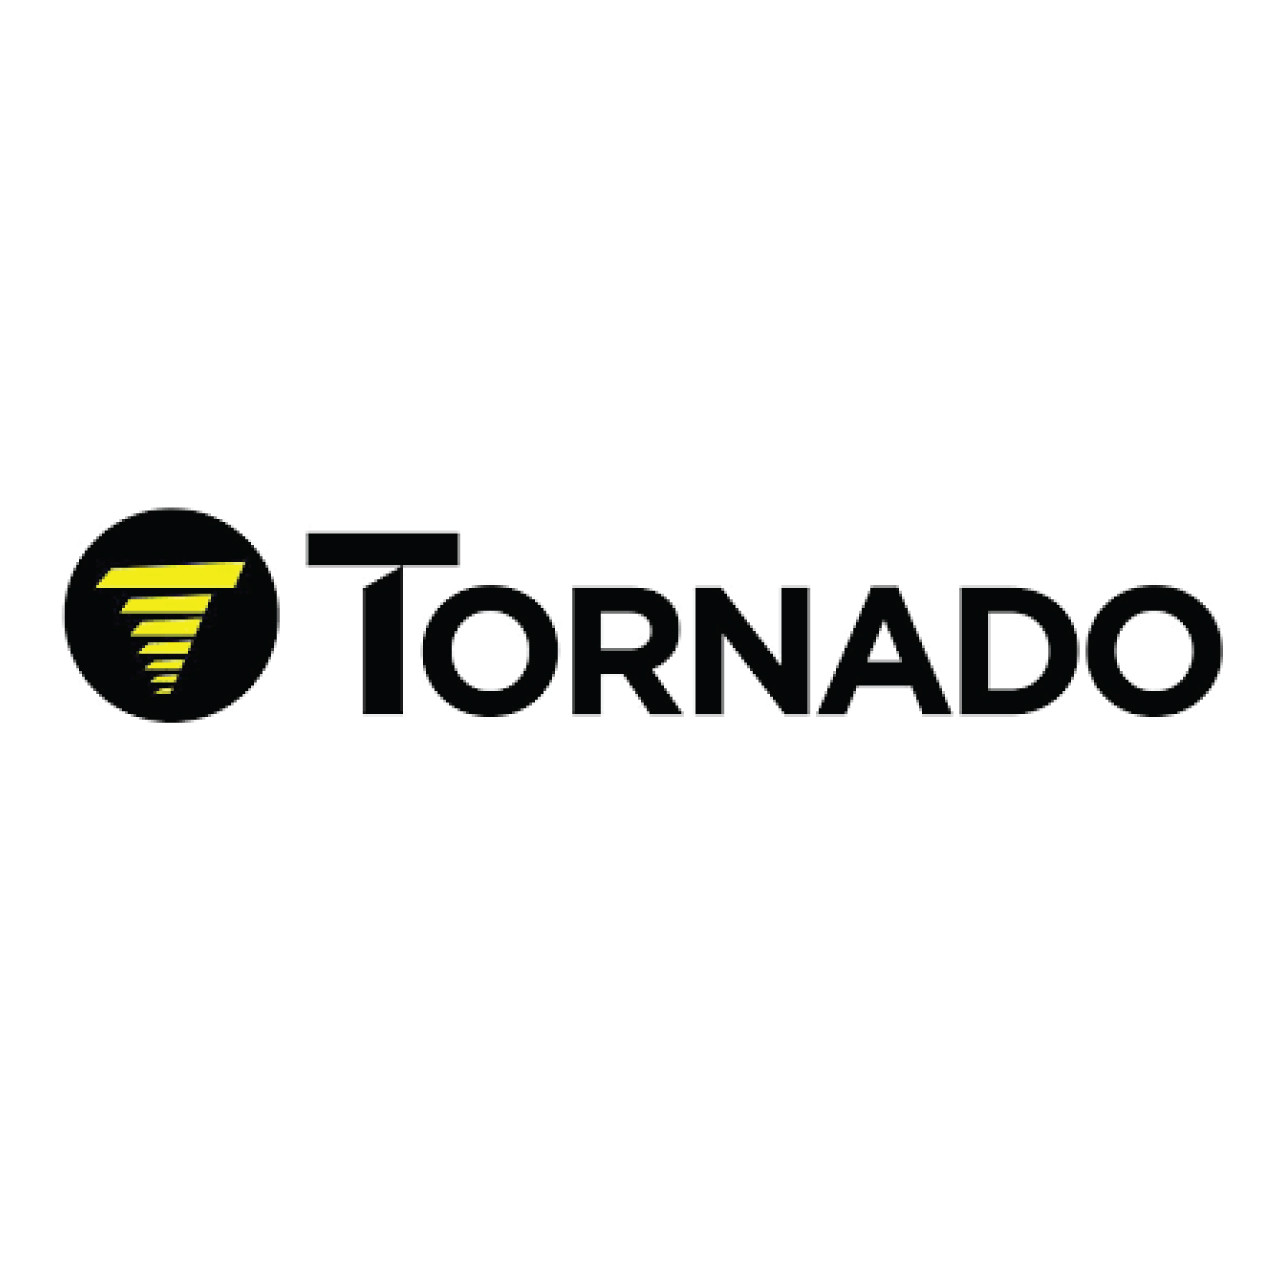 02-4011-0000, Tornado 02-4011-0000, Tornado INTERNAL CIRCLIP DIN 1300/35MM, Tornado parts